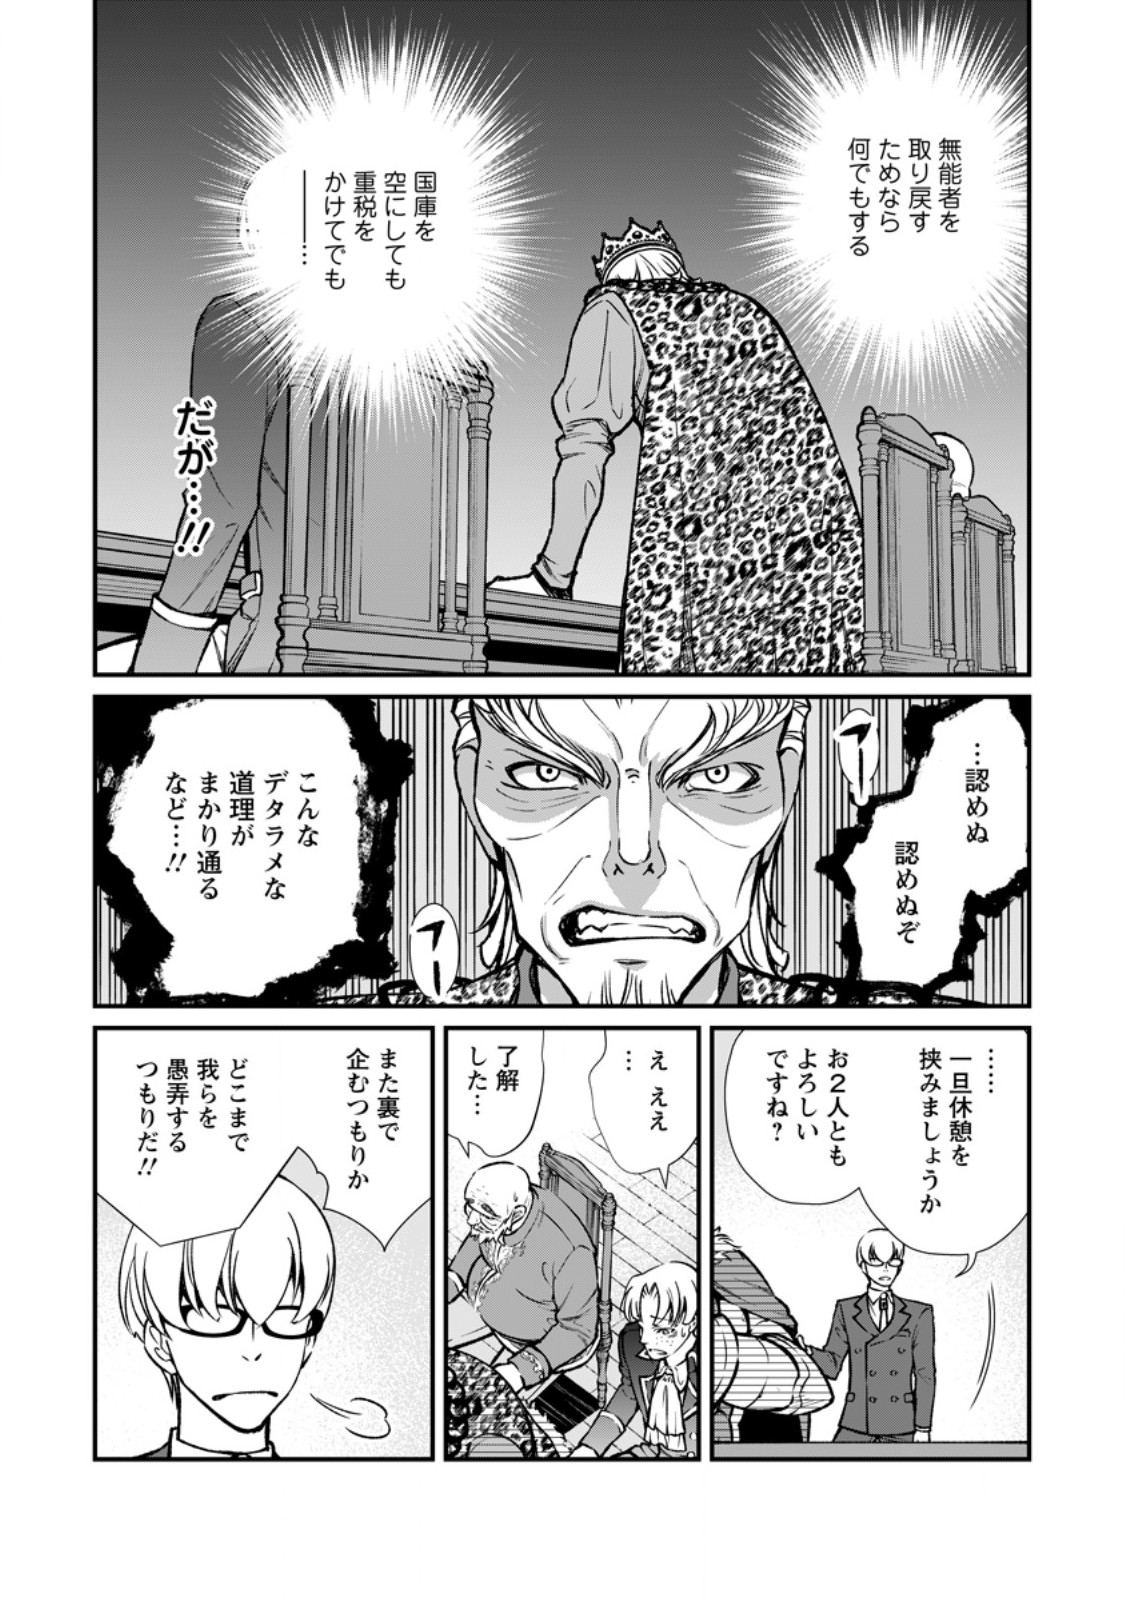 Taida no Ouji wa Sokoku wo Suteru - Chapter 11.2 - Page 7